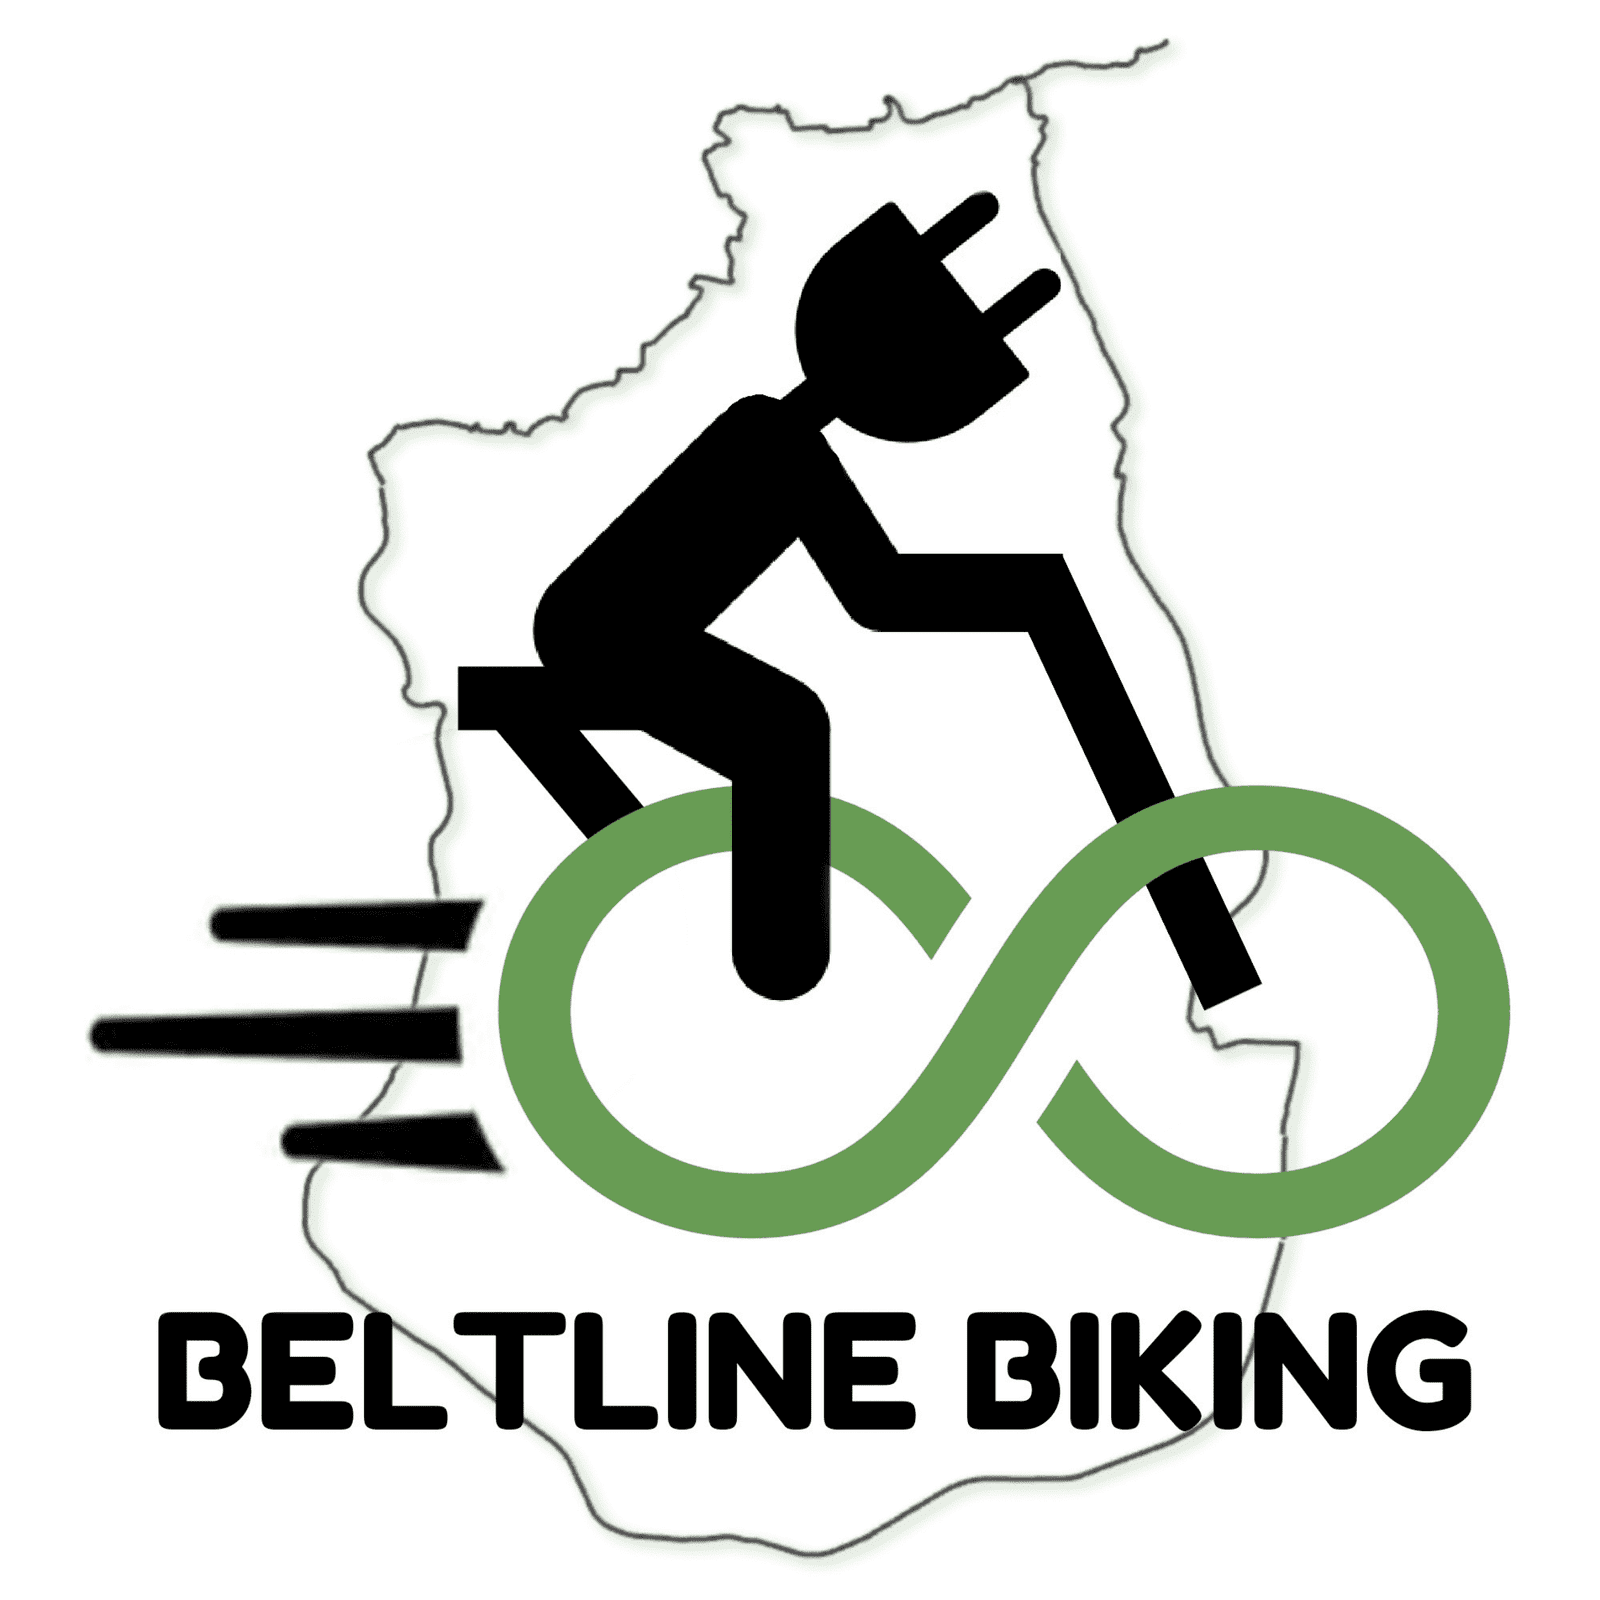 Beltline Biking